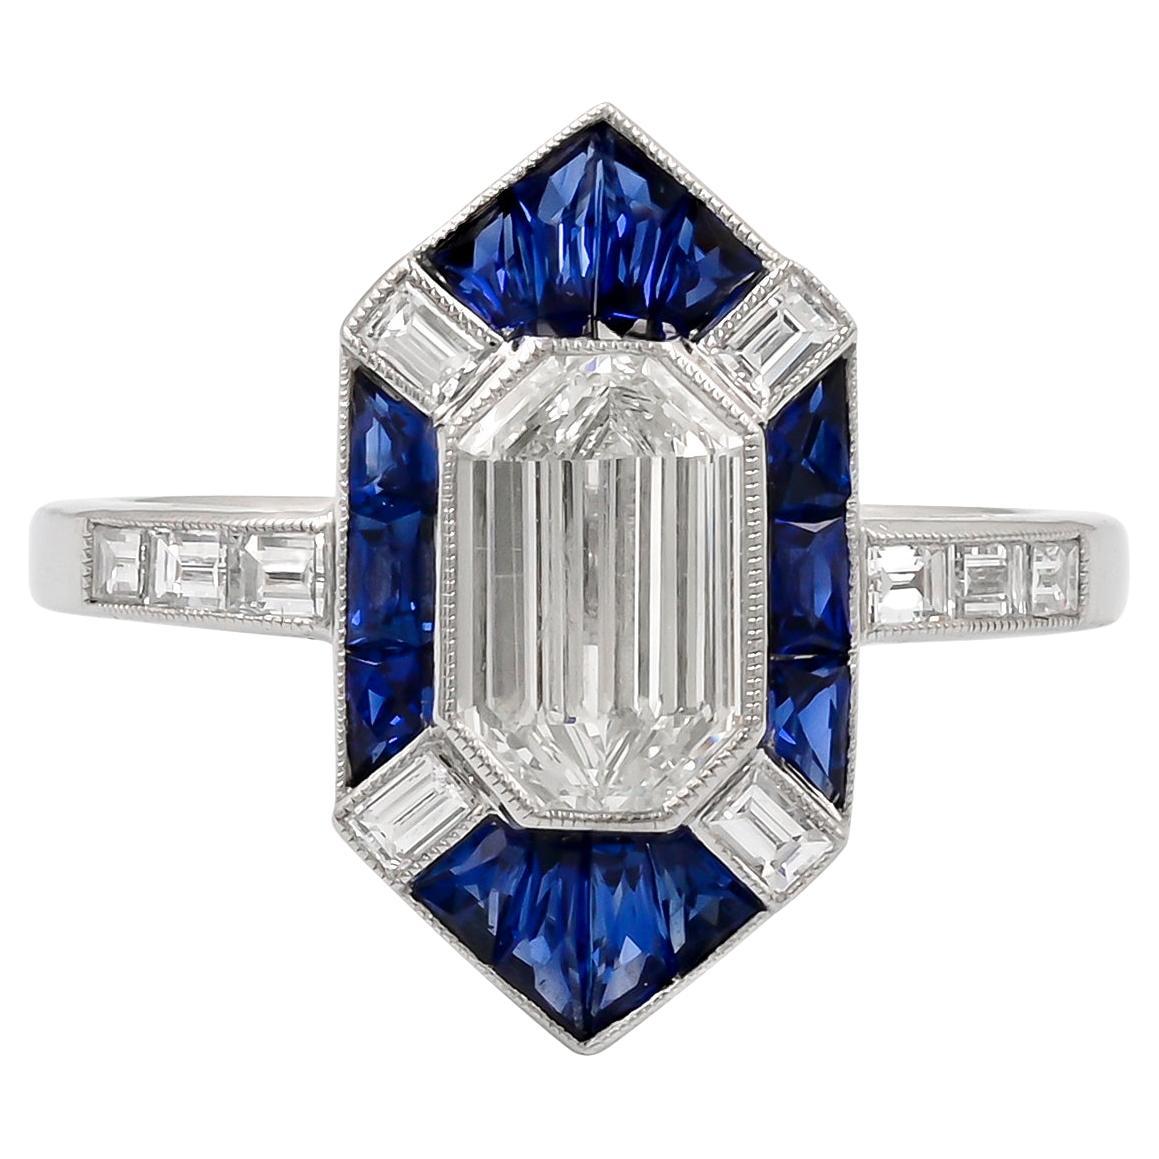 Sophia D. 1.00 Carat Diamond and Blue Sapphire Art Deco Ring in Platinum Setting